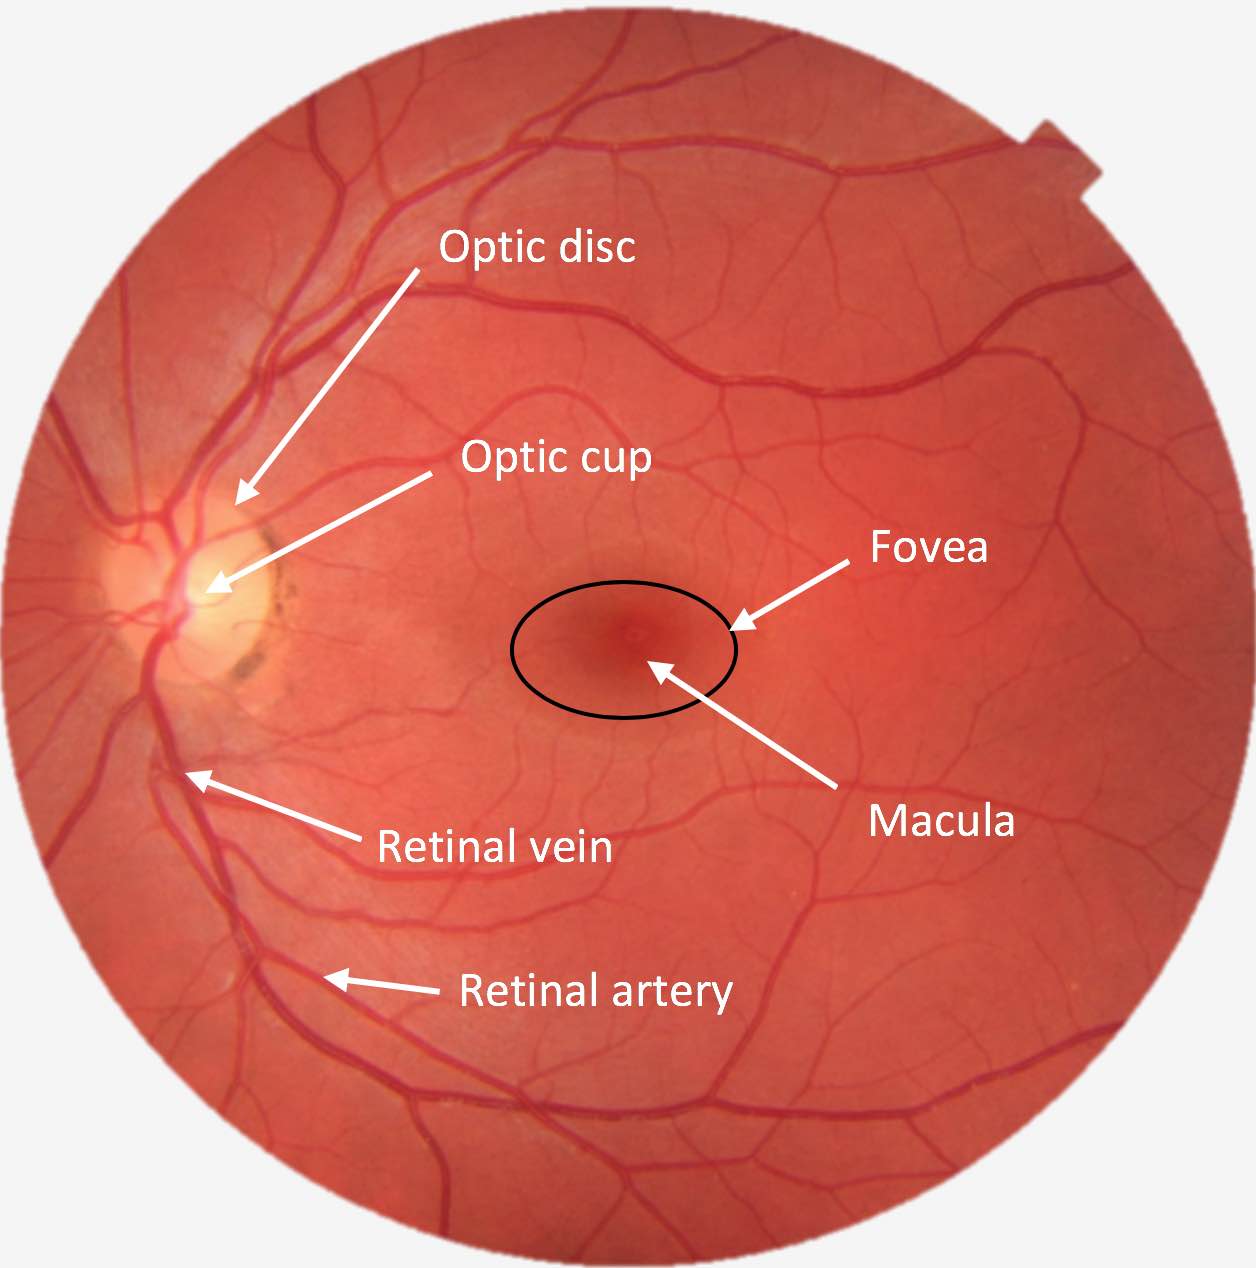 Eye Examination And Fundoscopy (Ophthalmoscopy) Station - Osce